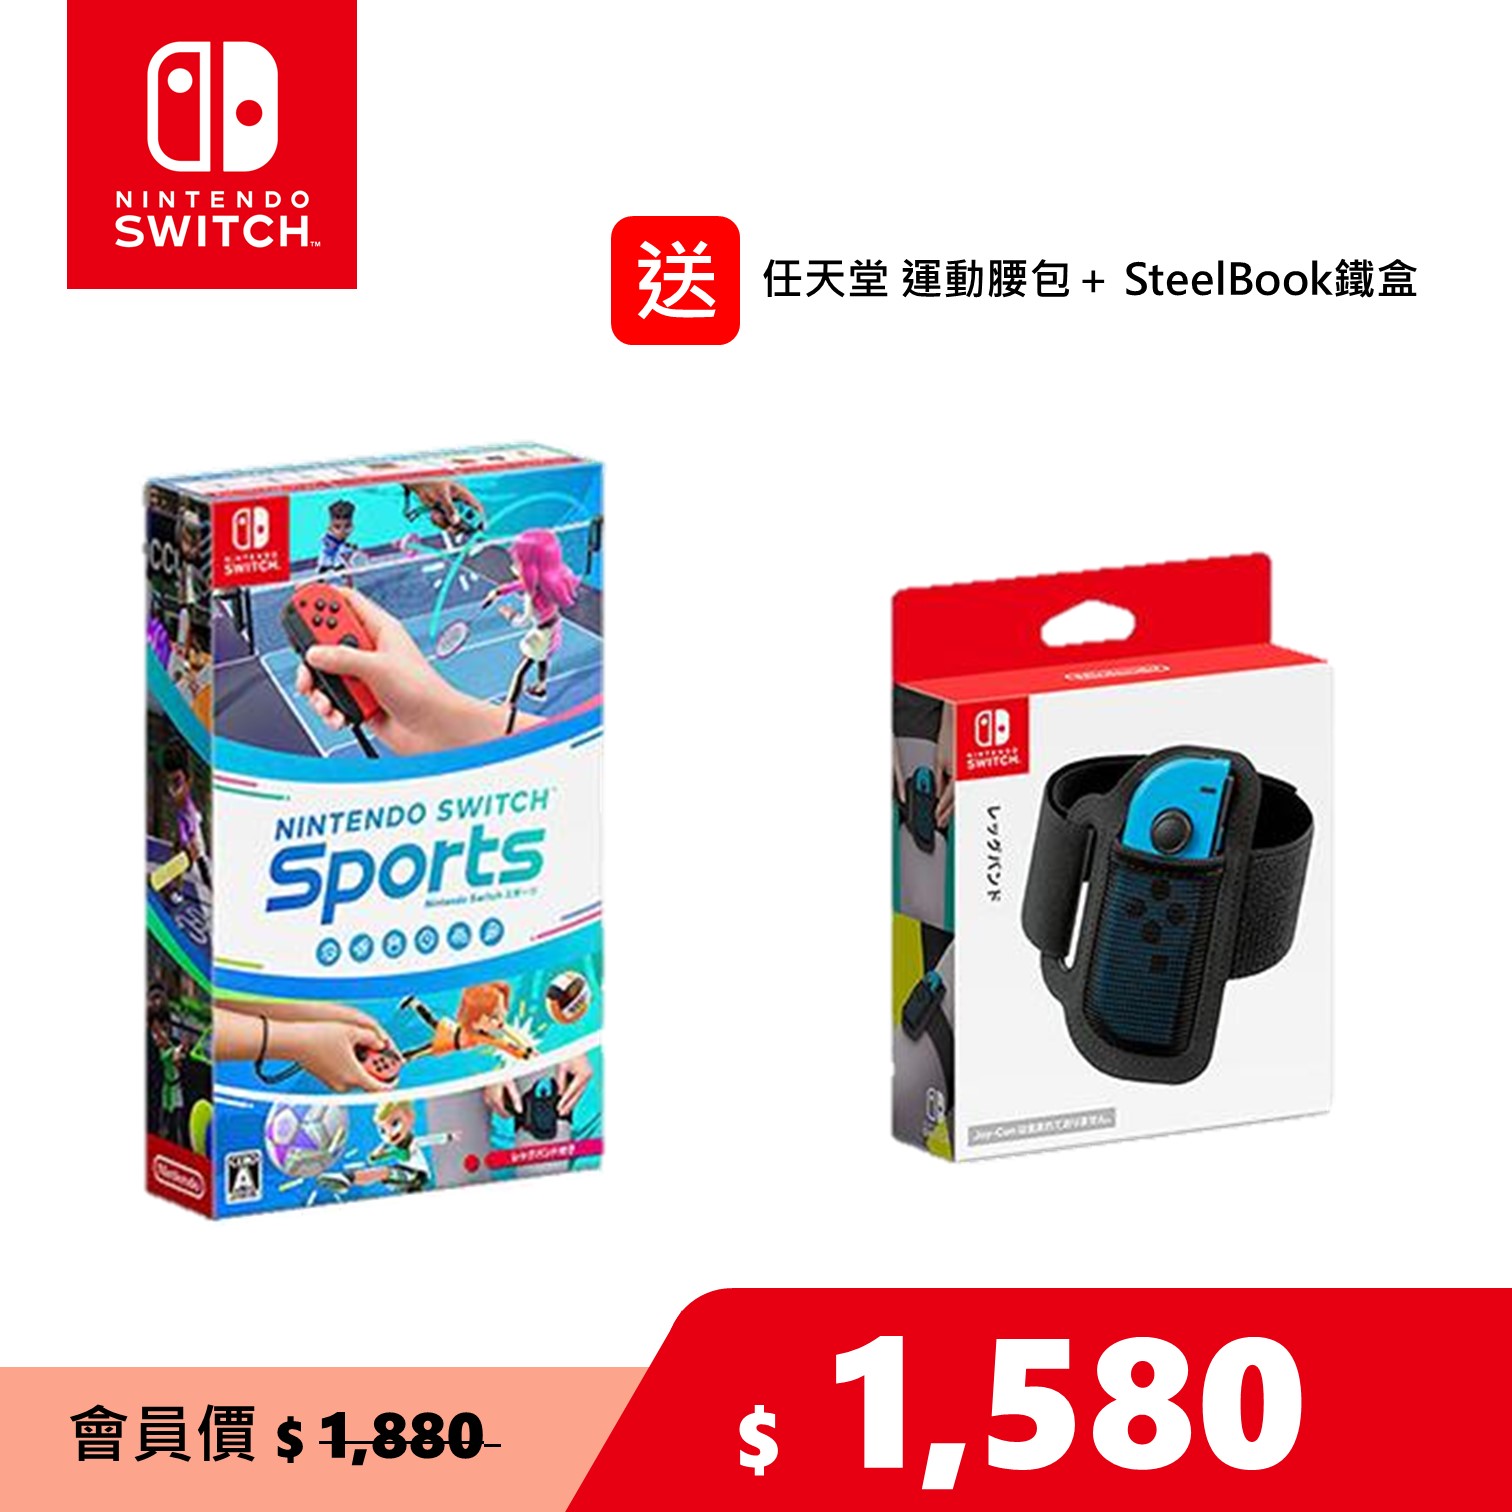 Nintendo Switch Sports 運動 中文版＋Switch Joy-Con 腿部固定帶+任天堂運動腰包和SteelBook鐵盒